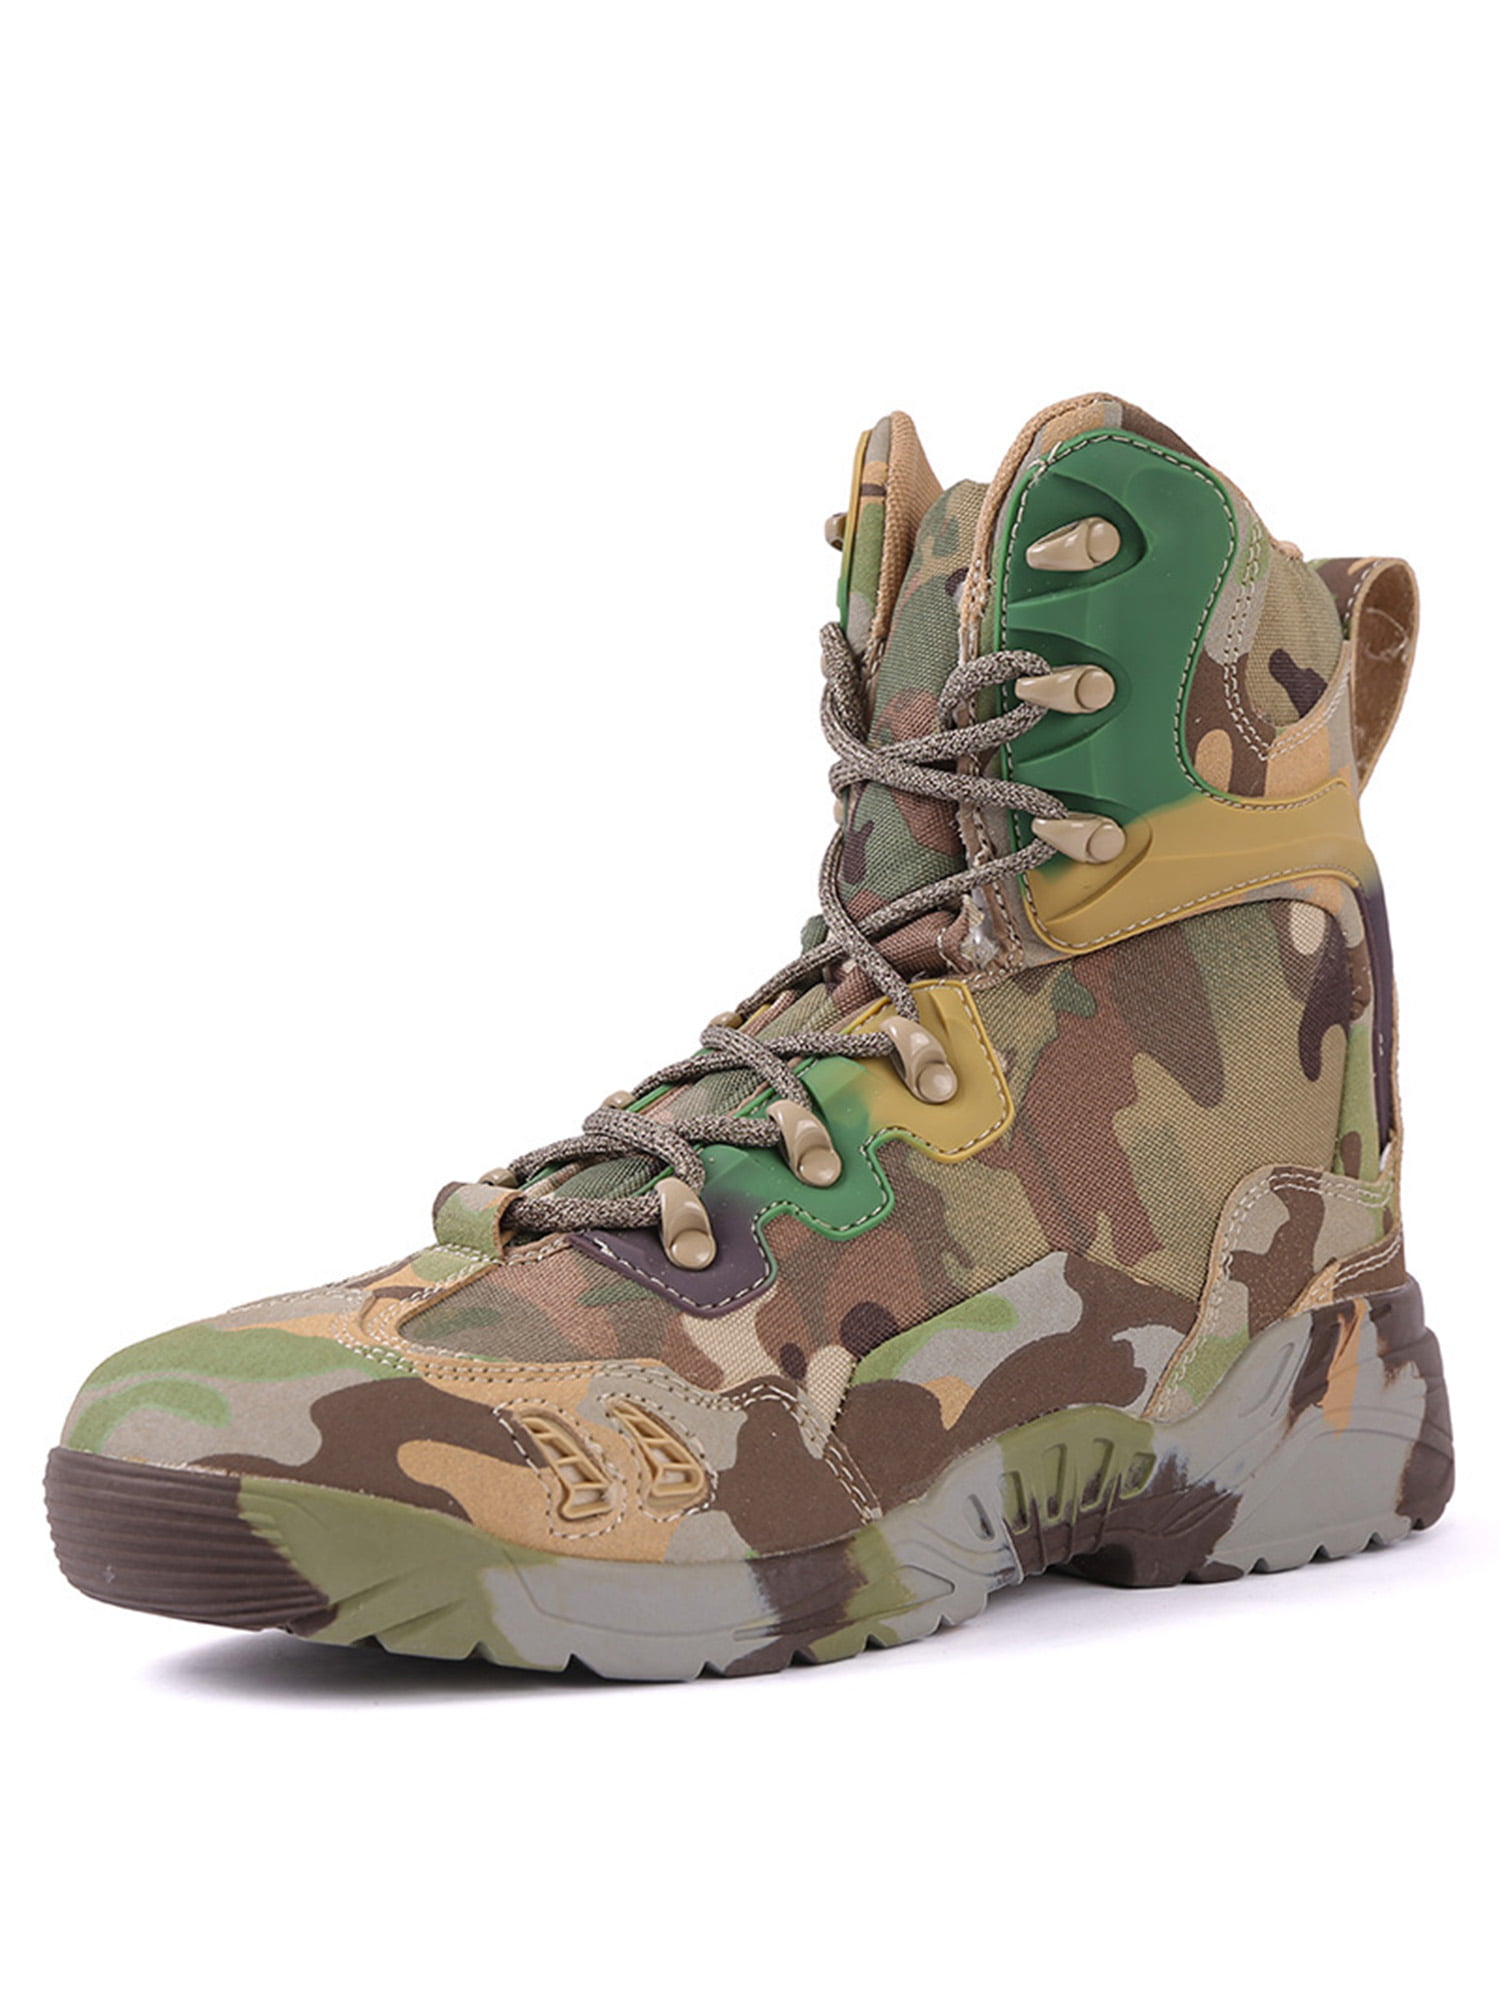 Men's Combat Boot Outdoor Hiking Shoes Walking Breathable Non-slip Waterproof Sz